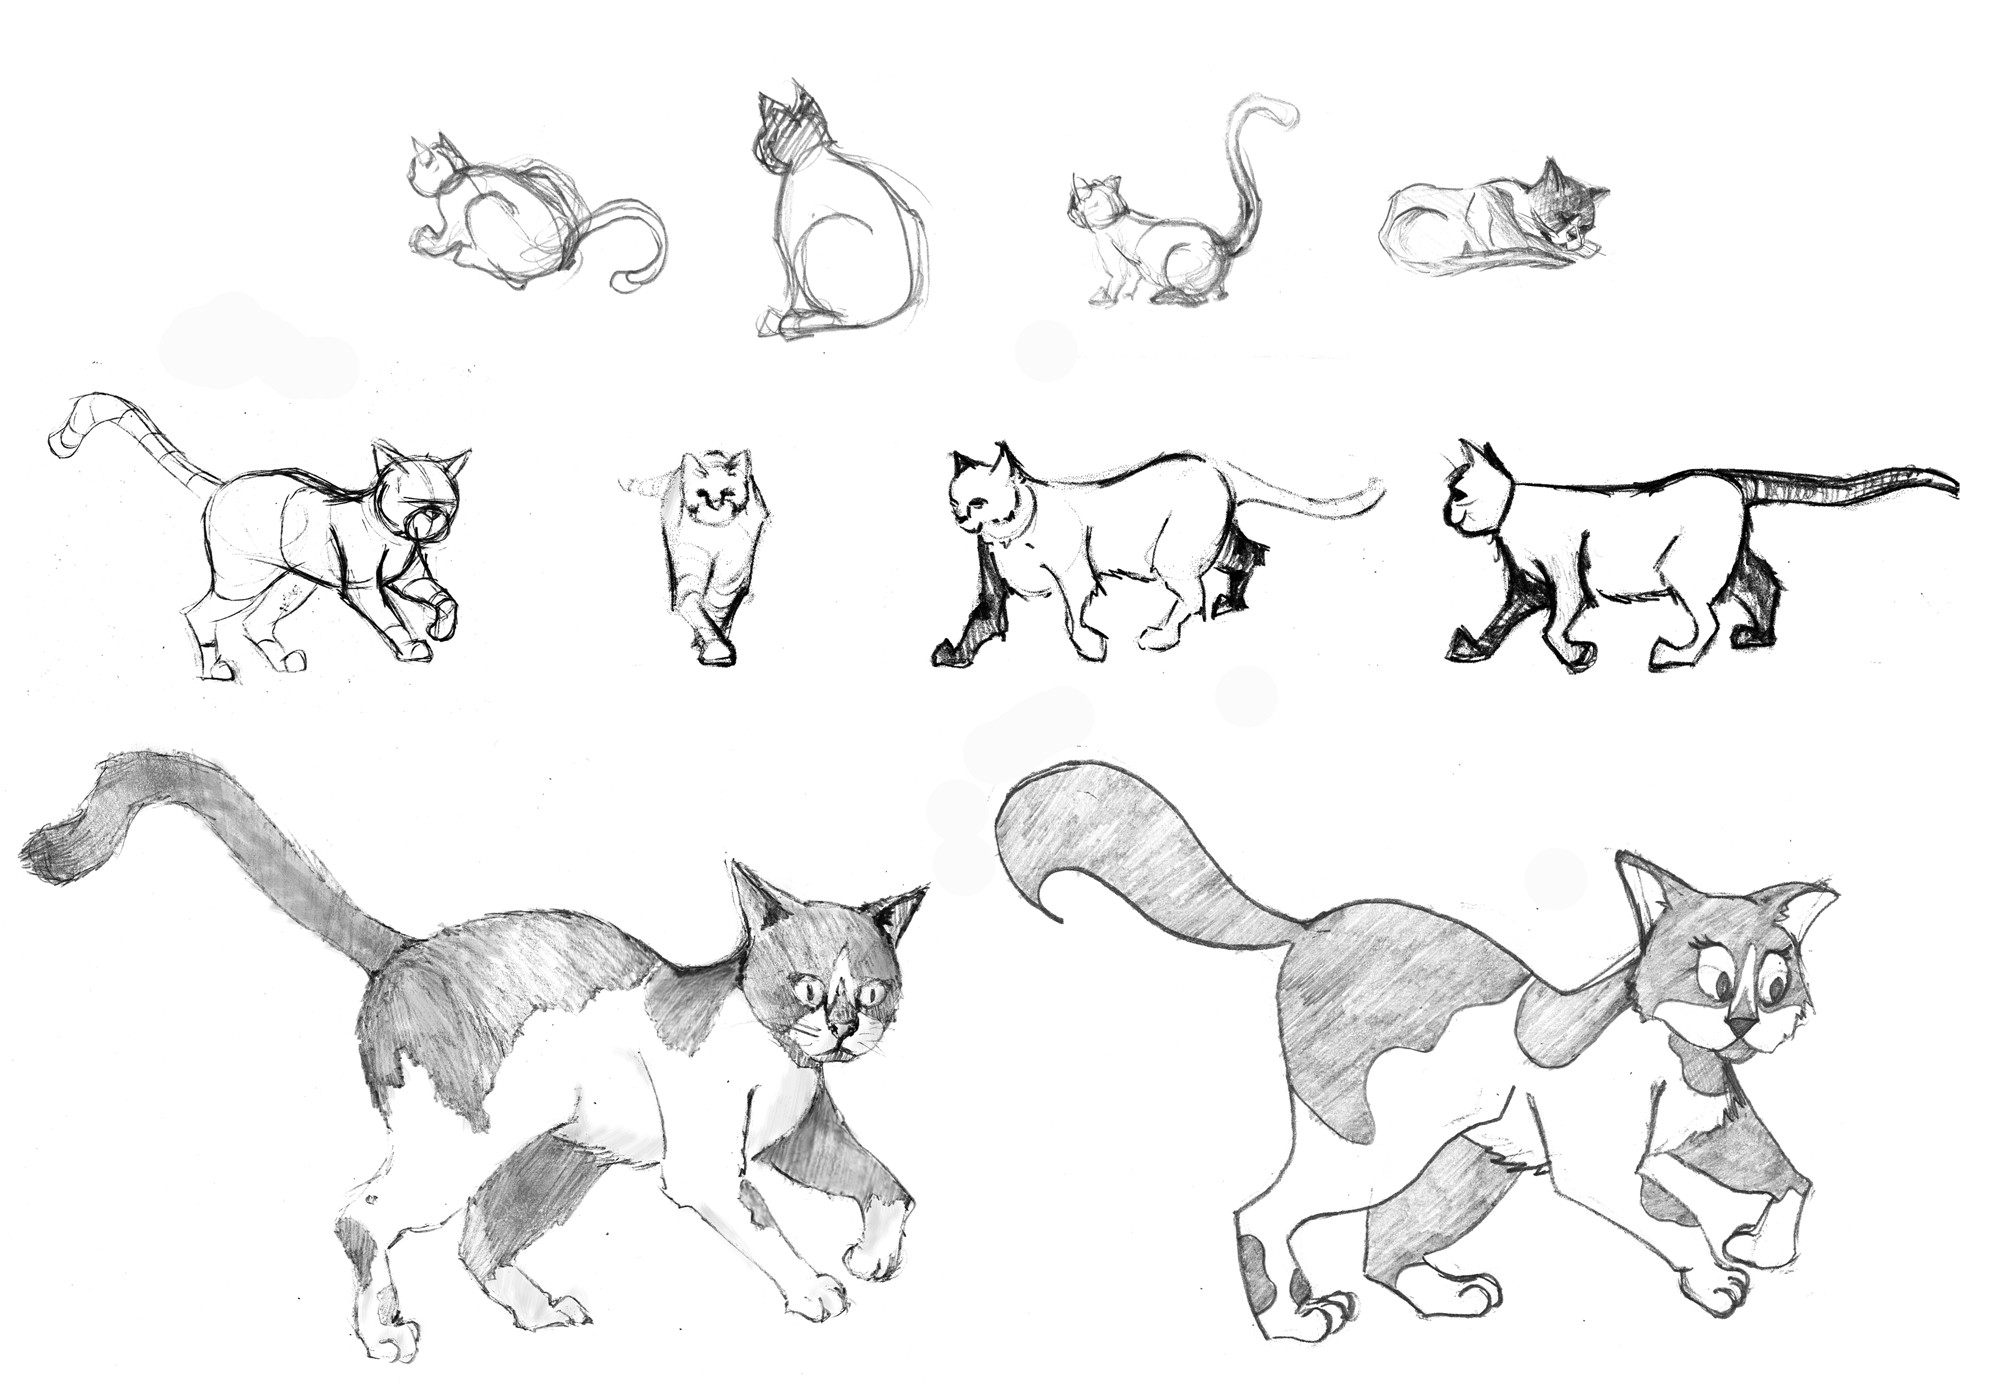 Cat character development/sketches (1/2).